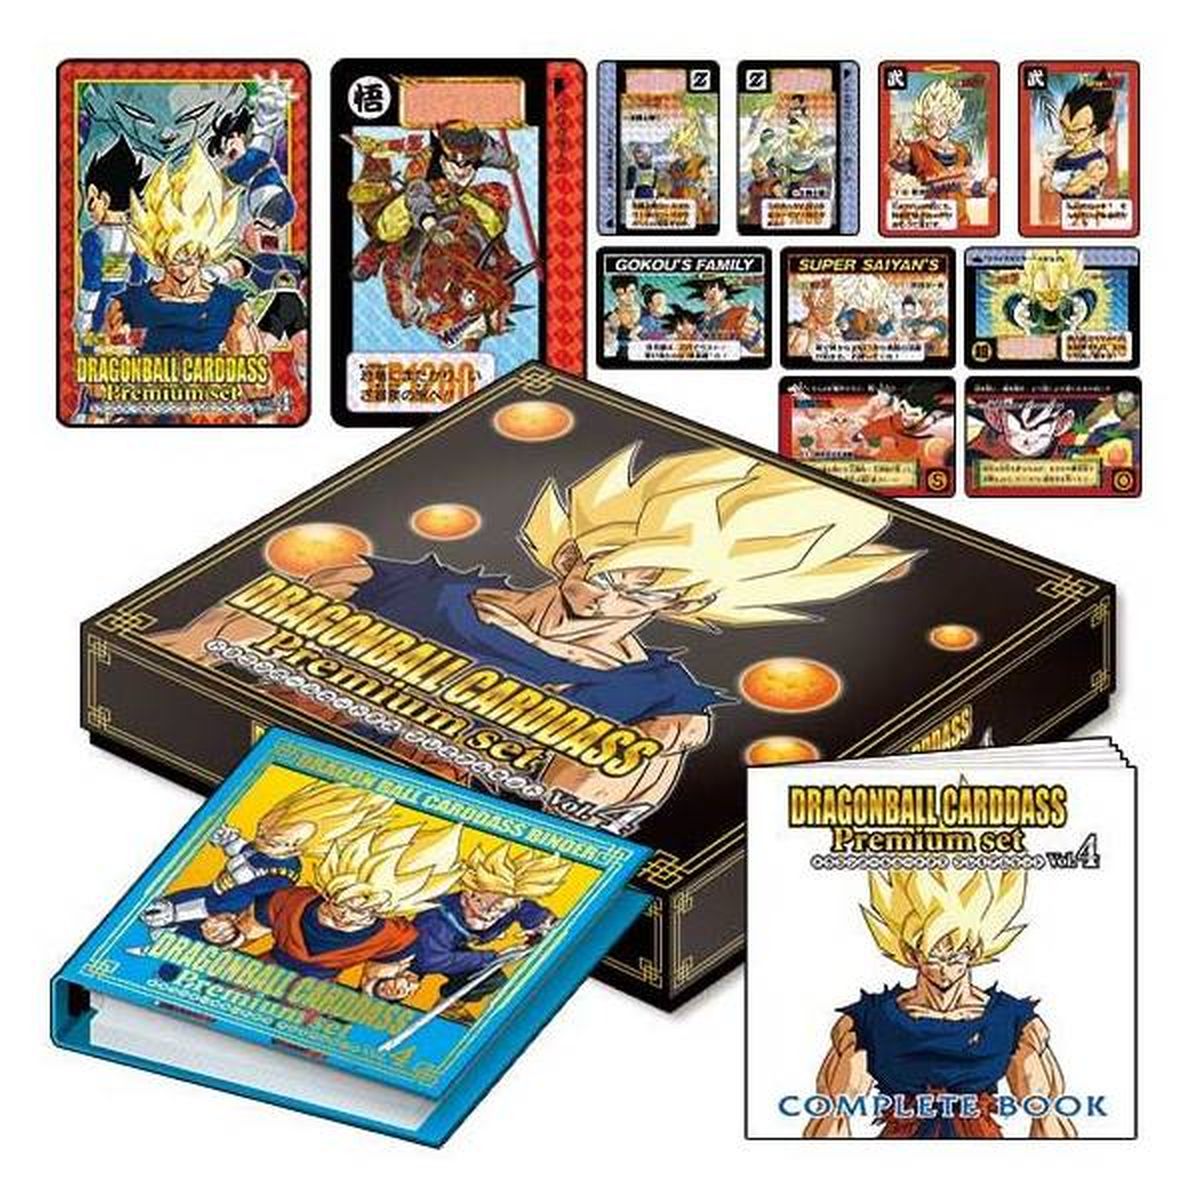 Dragon Ball Carddass Premium Set Volume 4